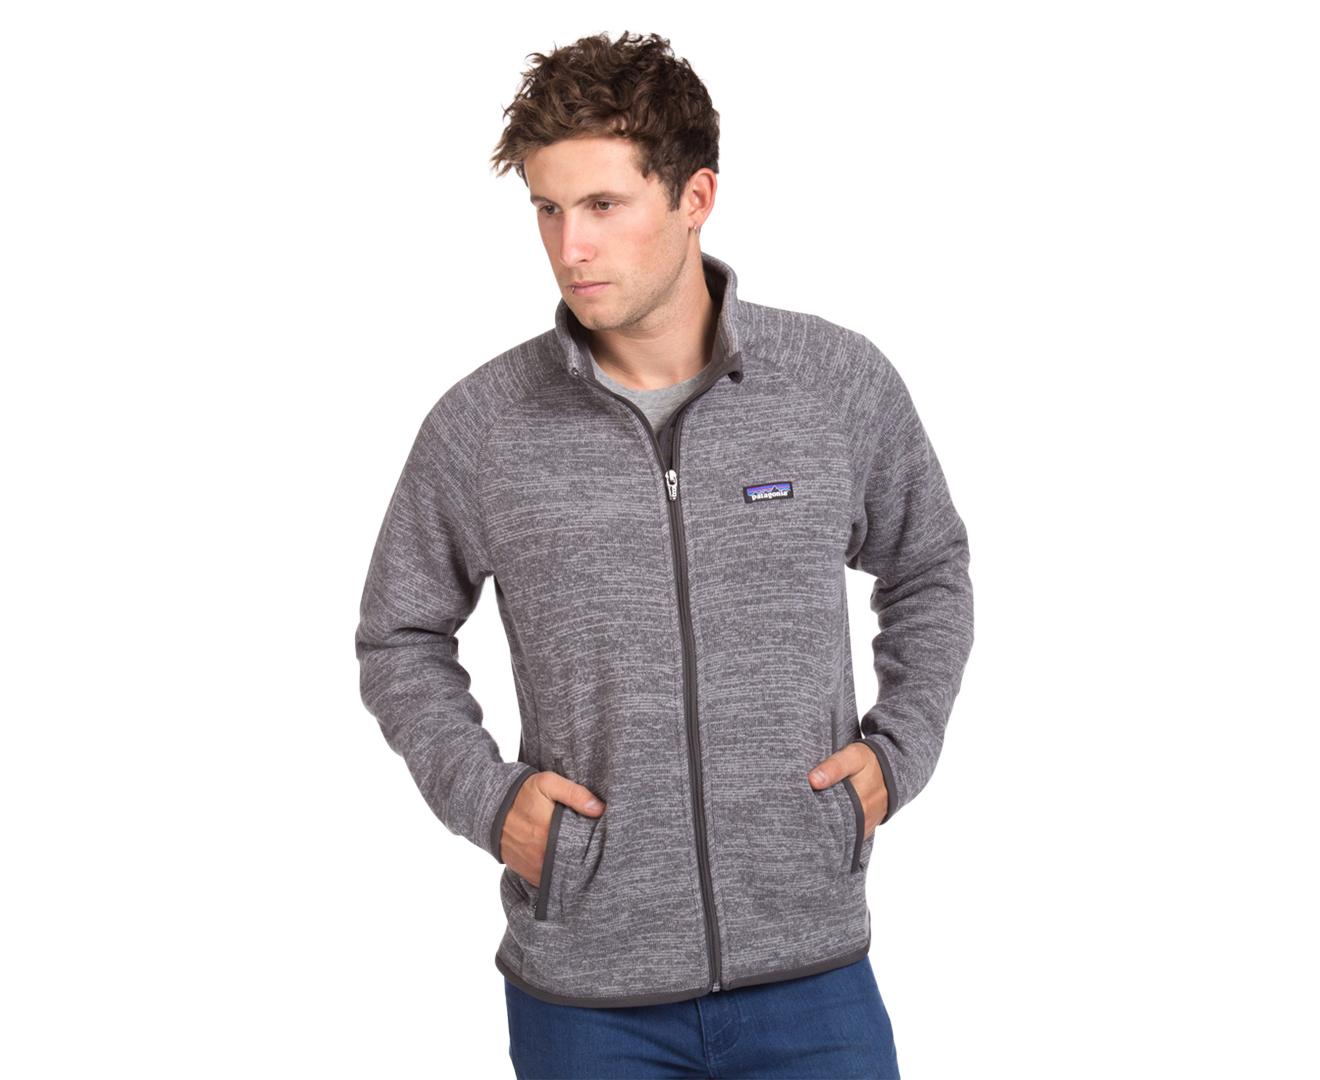 Patagonia Men's Better Sweater Jacket - Nickel | Catch.com.au